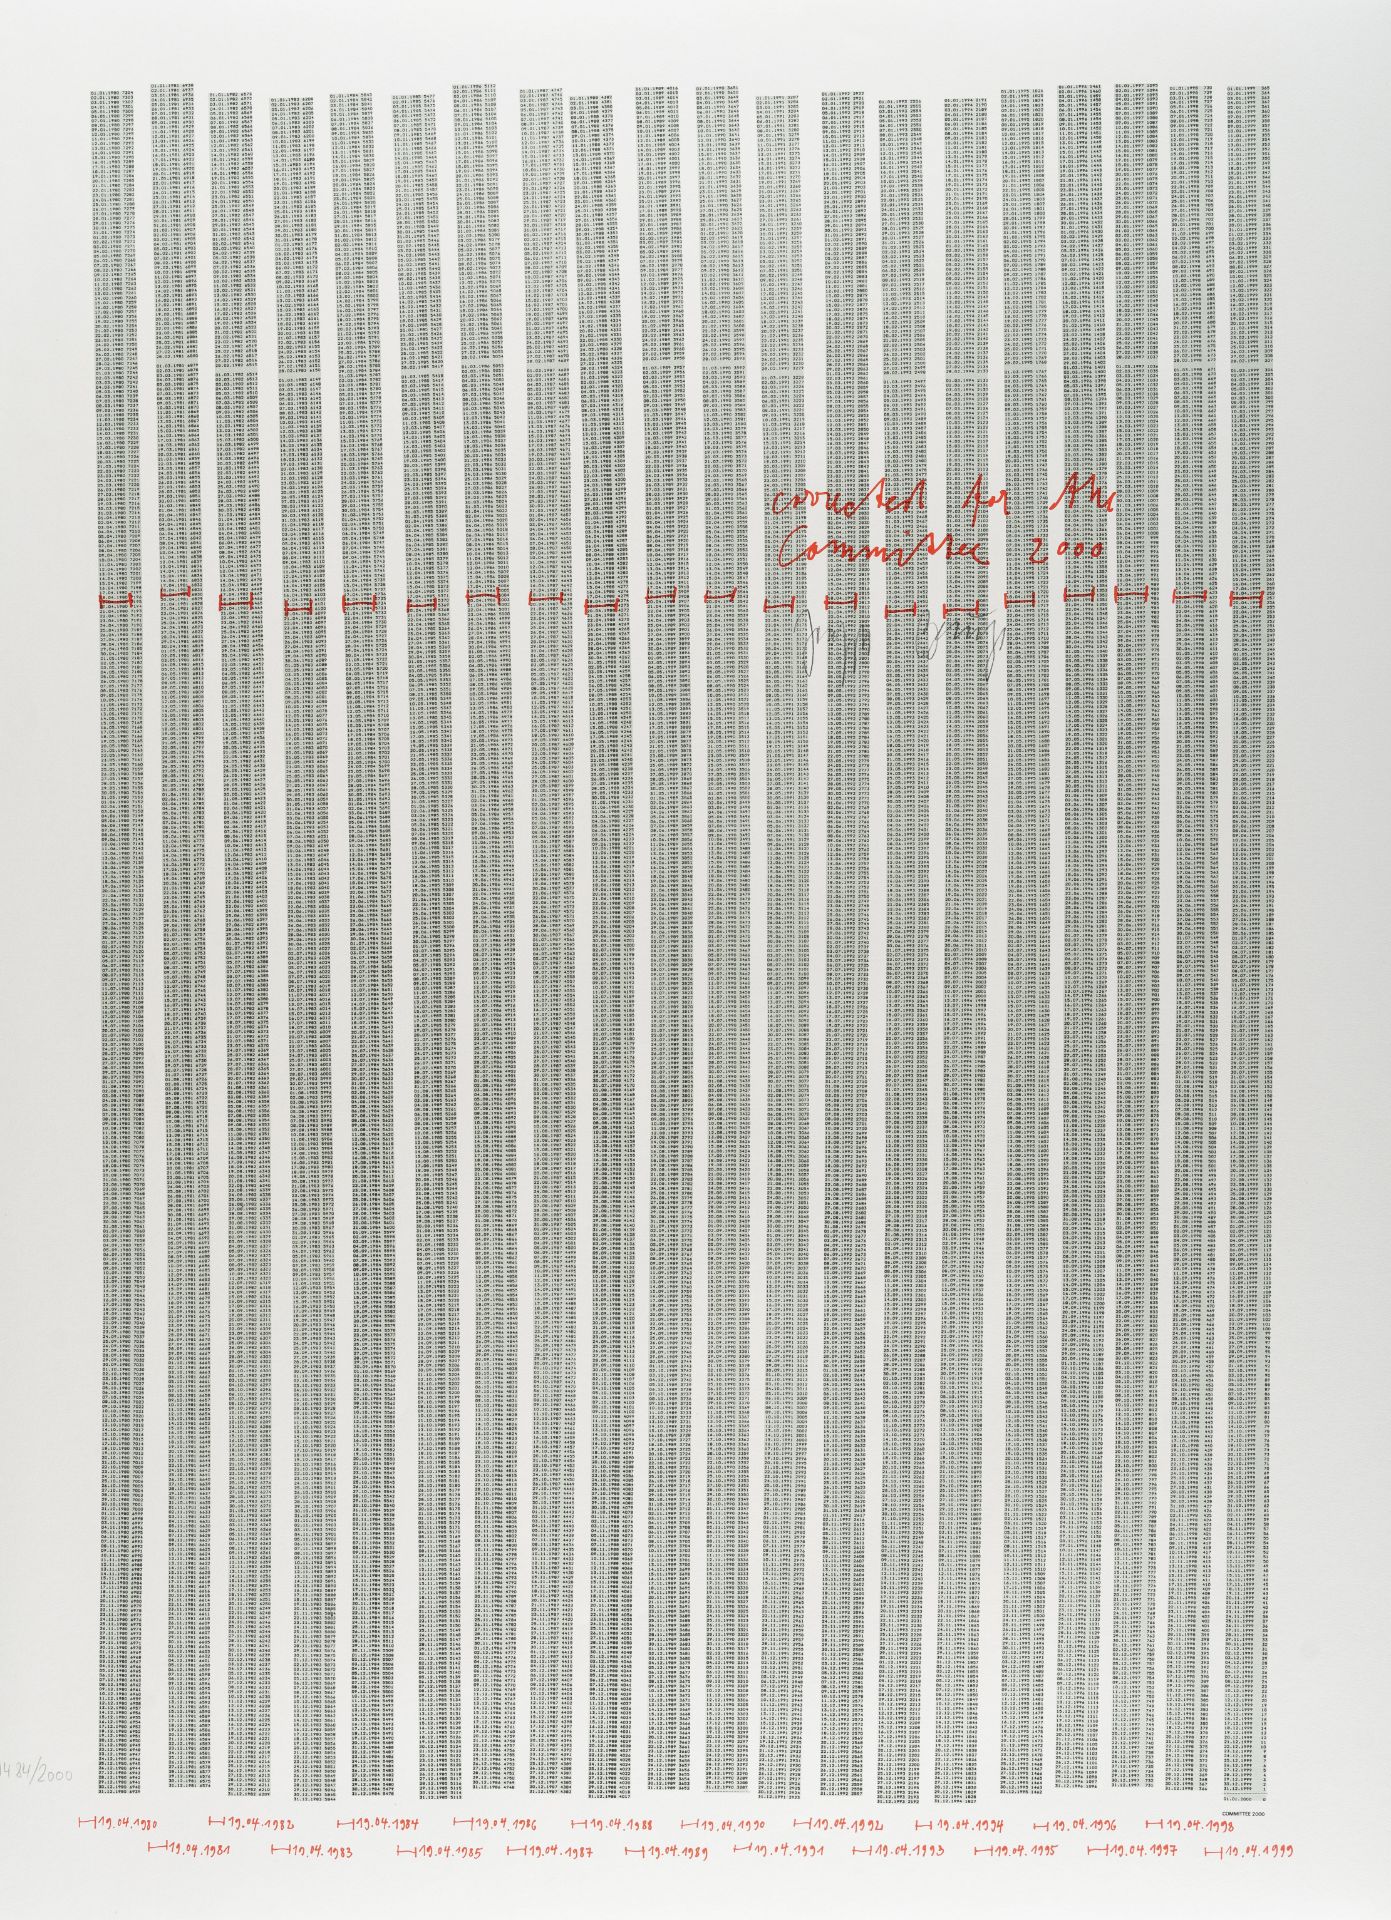 Joseph Beuys (1921 Krefeld - Düsseldorf 1986) – Countdown 2000